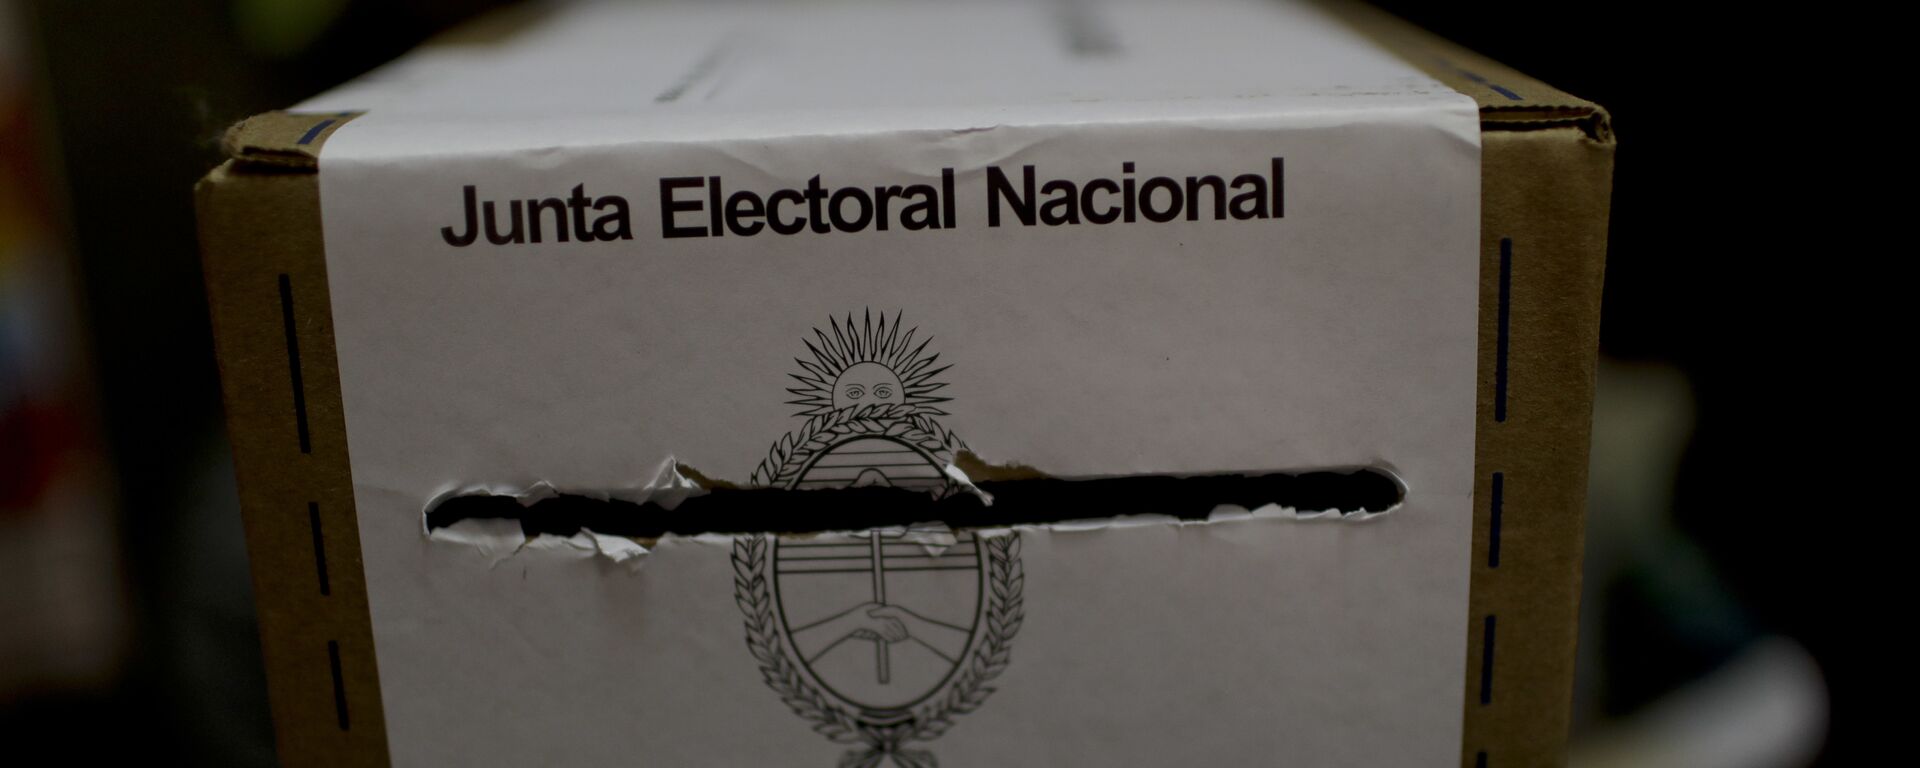 Elecciones legislativas en Argentina - Sputnik Mundo, 1920, 11.09.2021